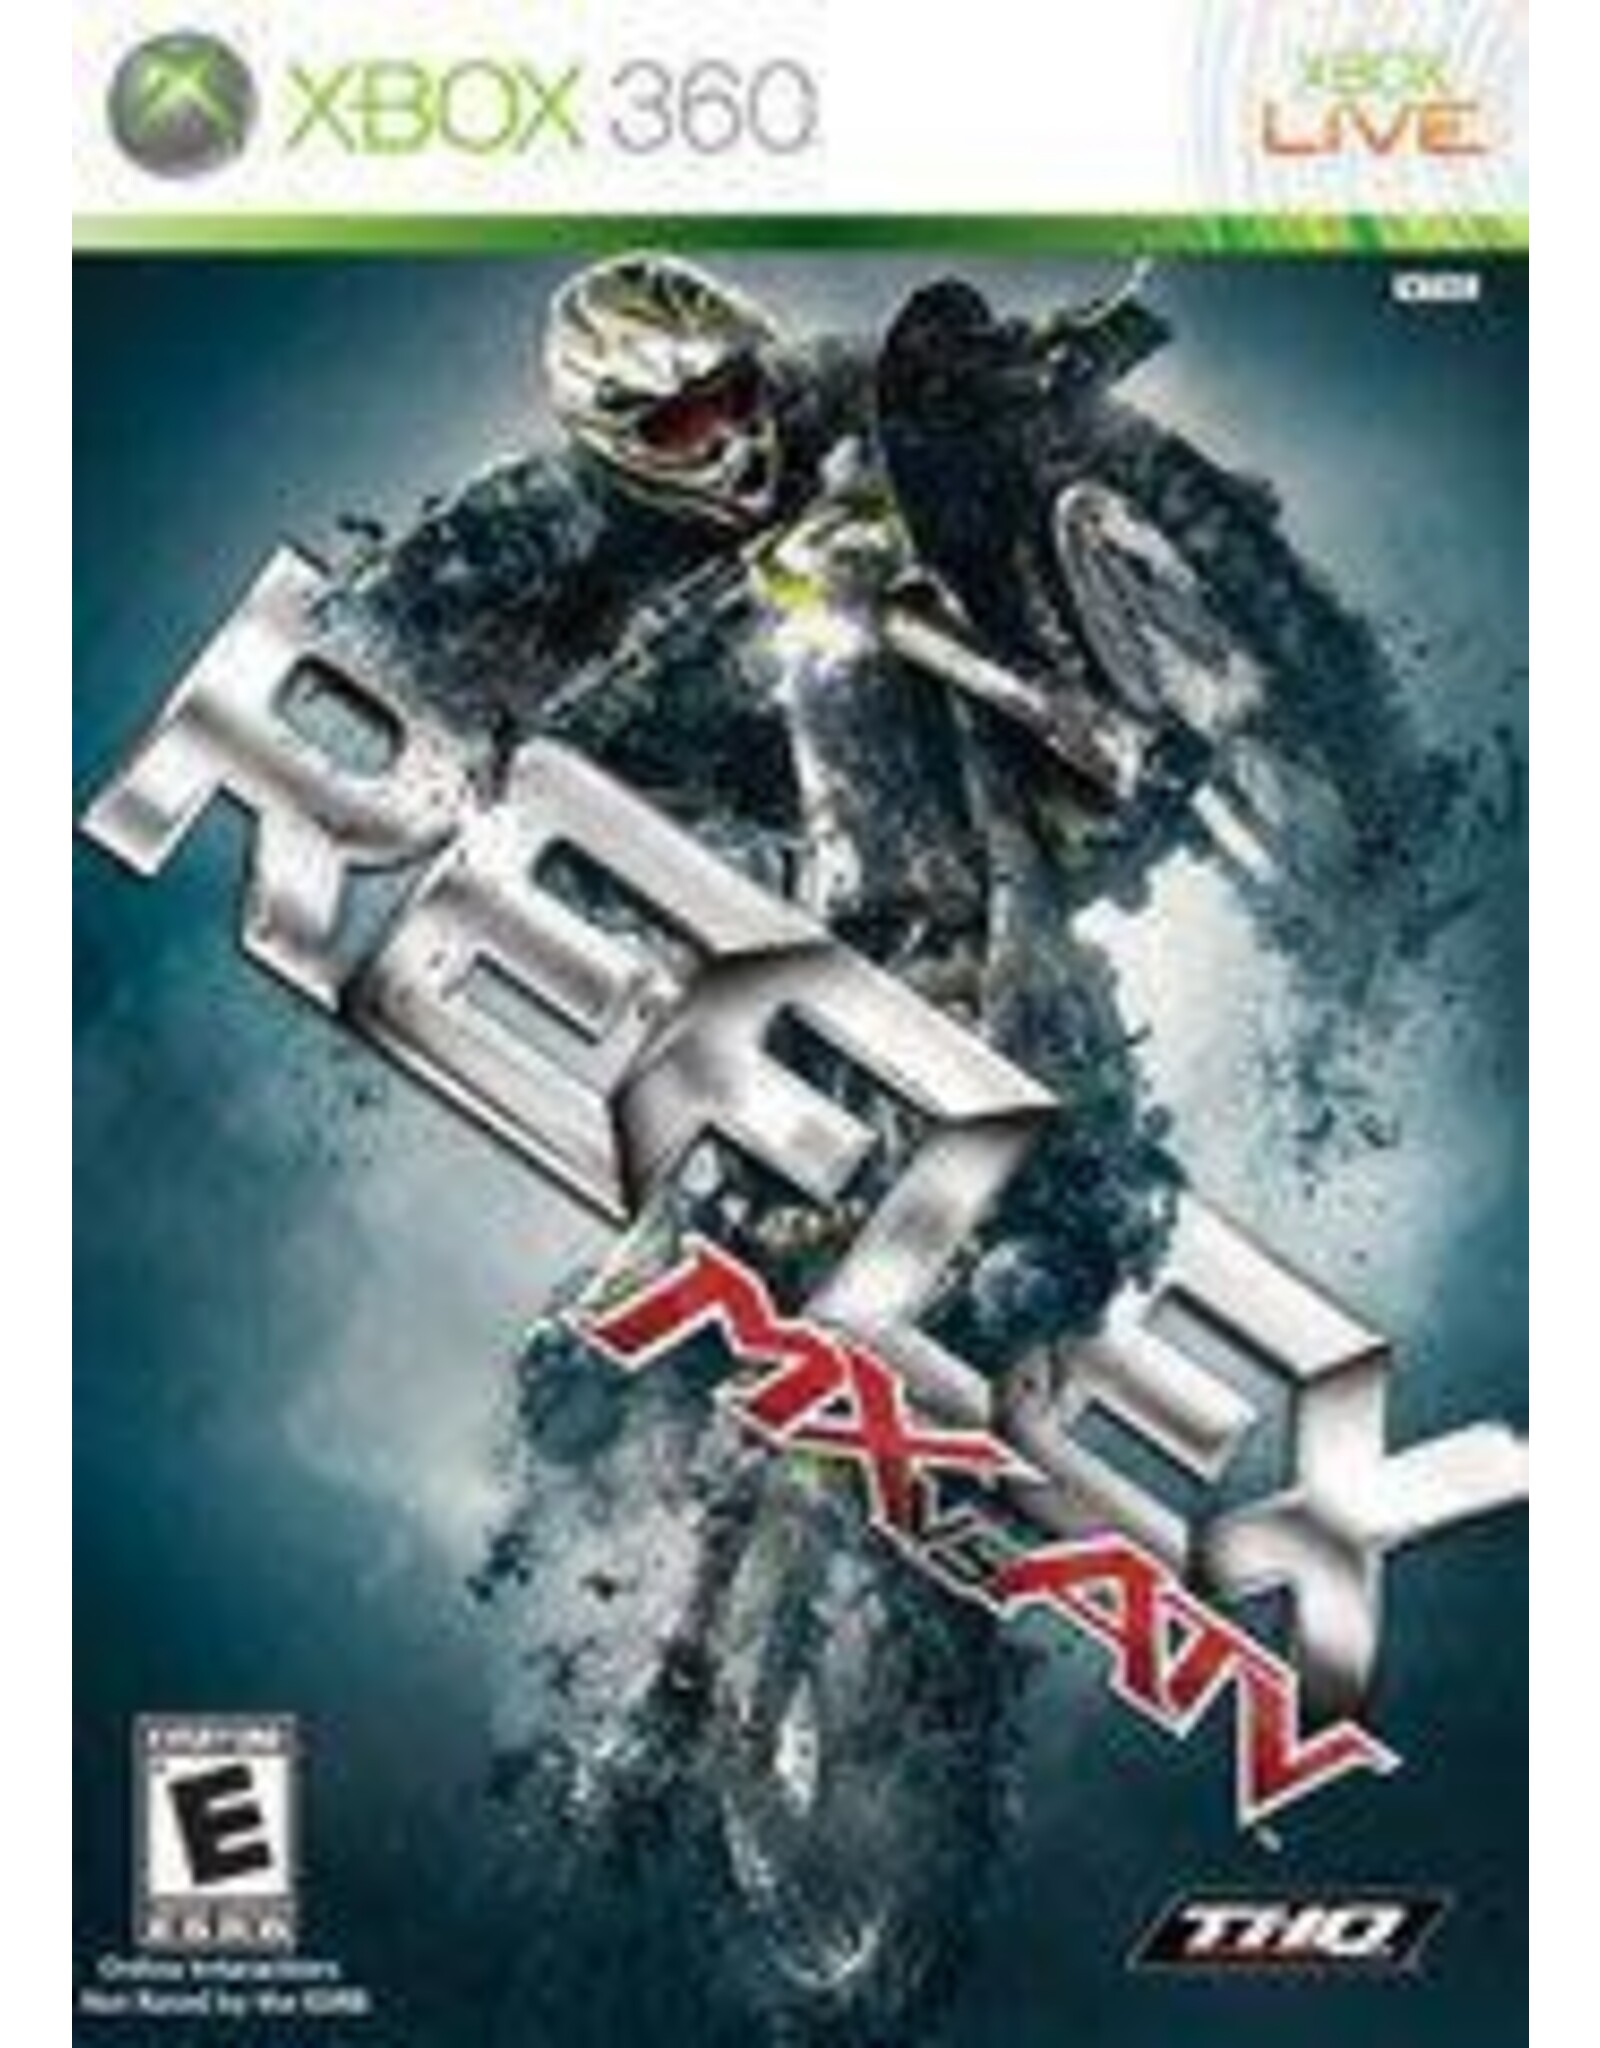 Xbox 360 MX vs. ATV Reflex (Used, Cosmetic Damage)